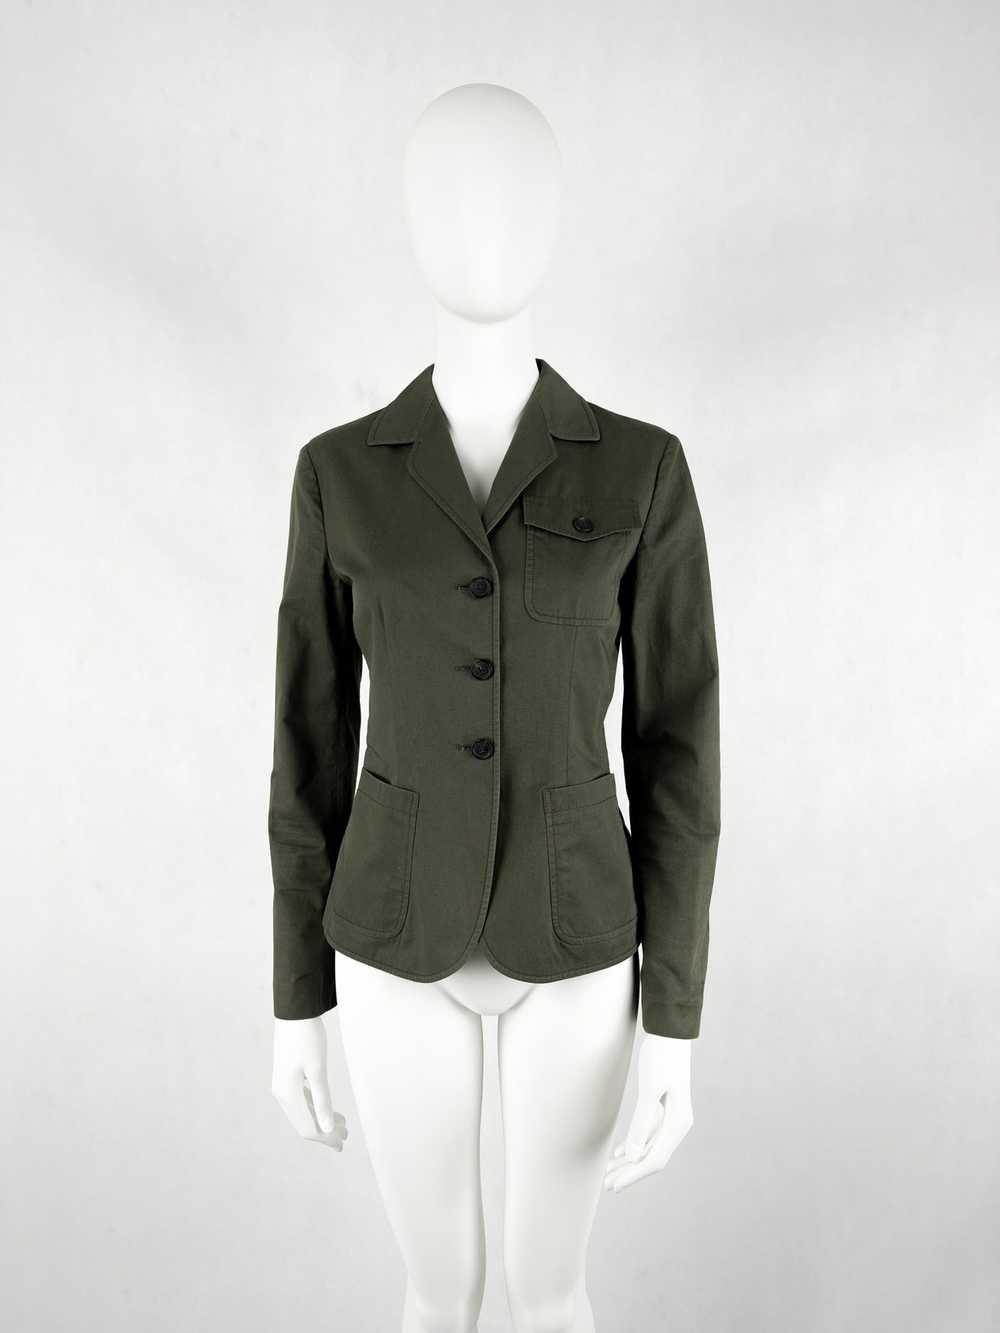 Prada Prada olive green blazer jacket - image 2